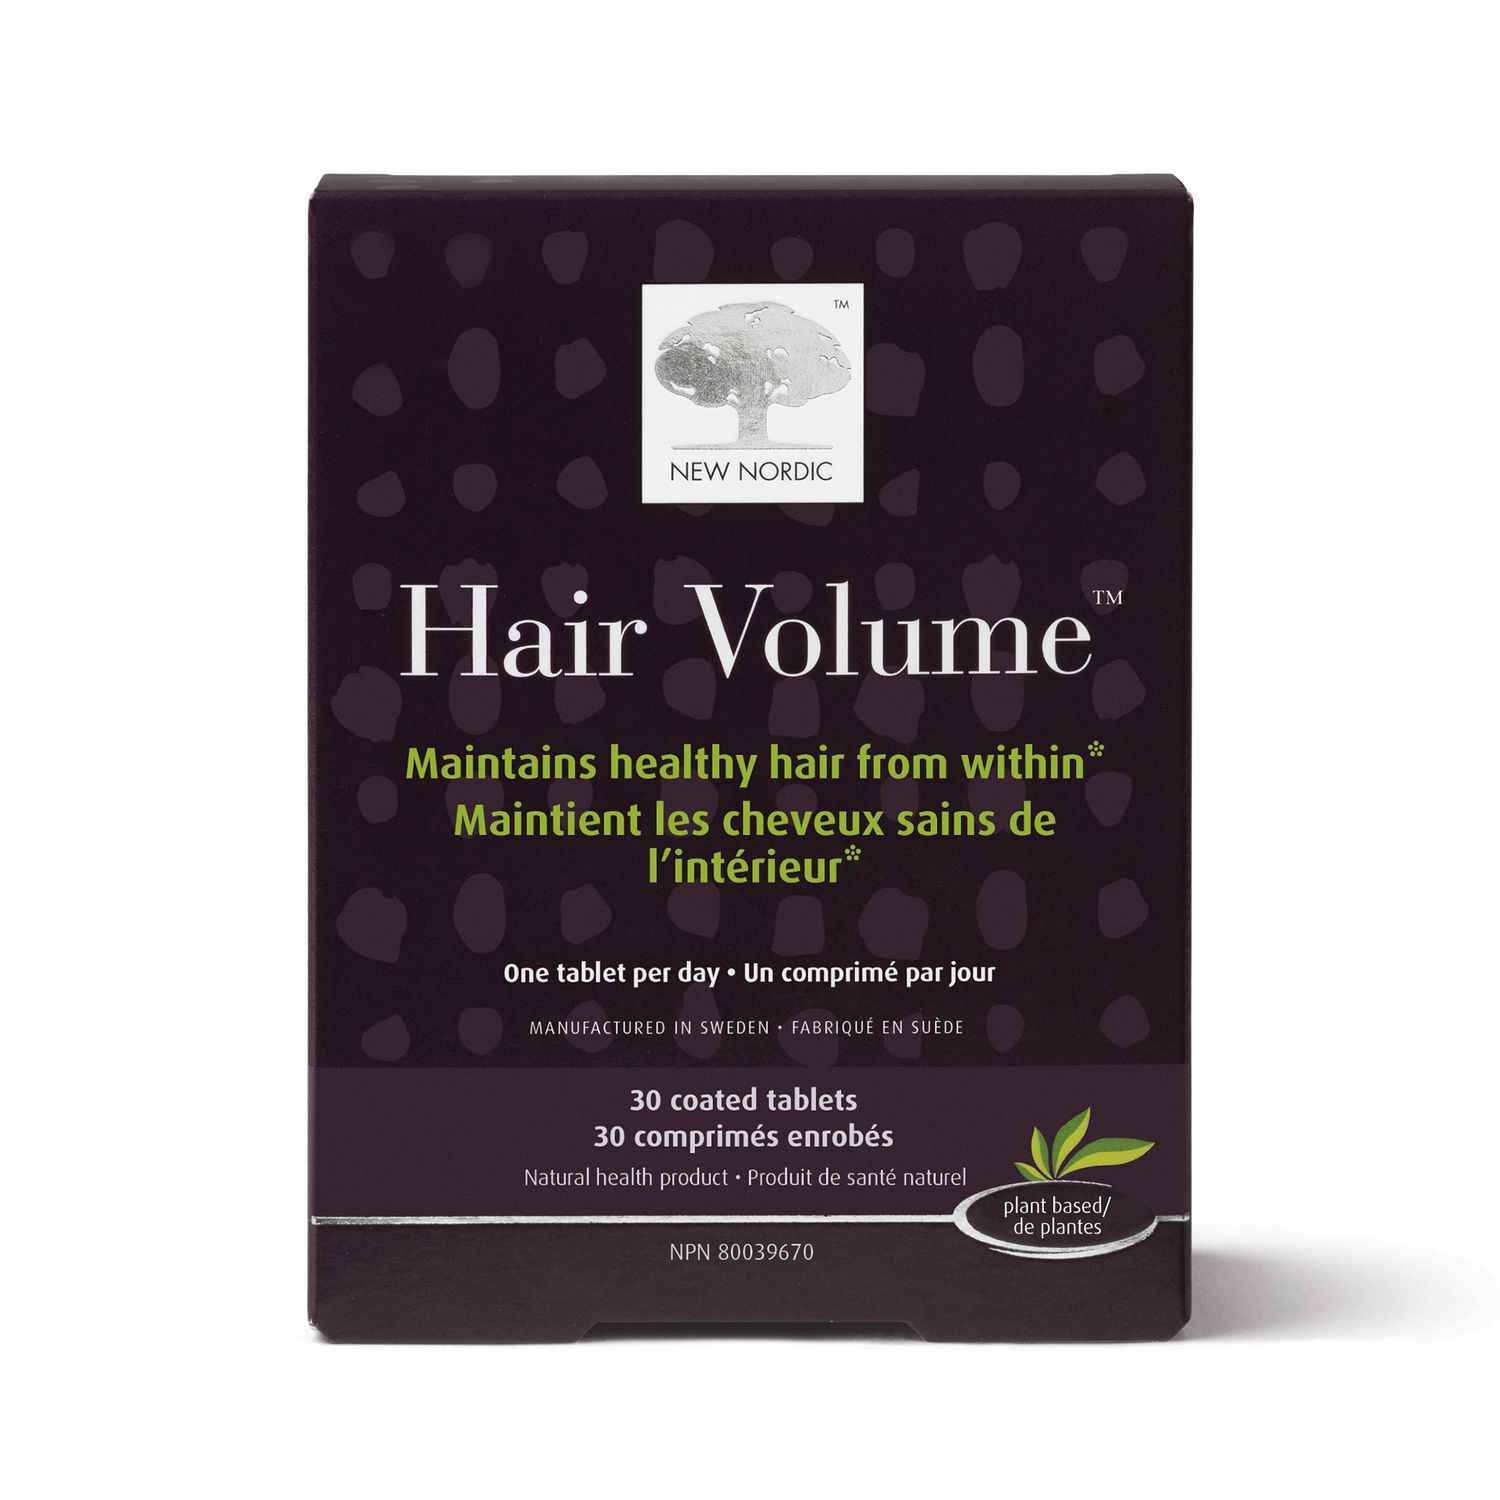 New Nordic Hair Volume - 30 tablets | Walmart Canada